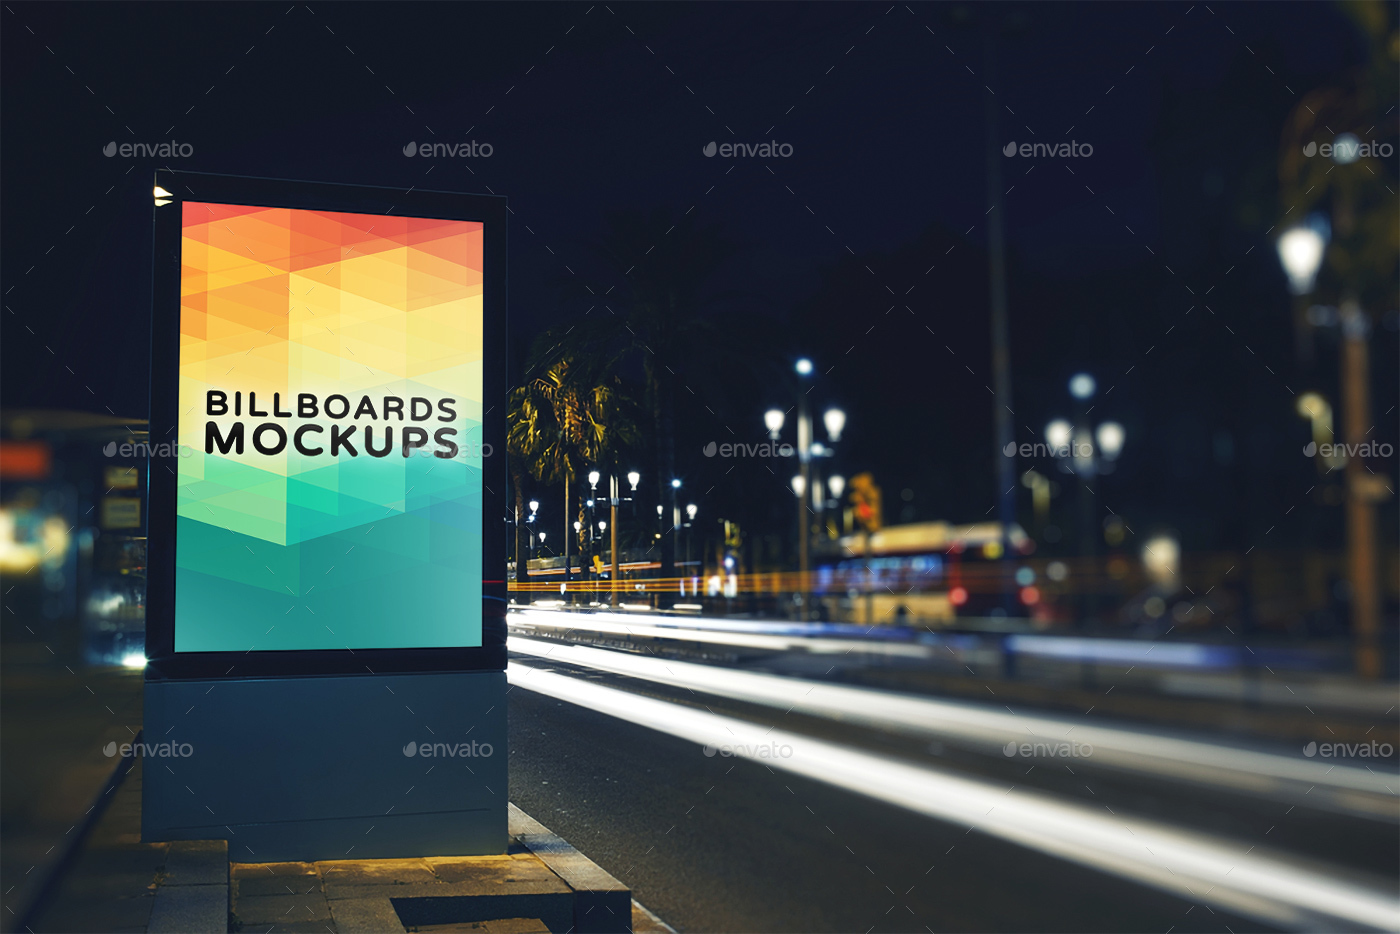 夜间广告牌展示样机模版 Billboards Mockups at Night Vol.1插图(8)